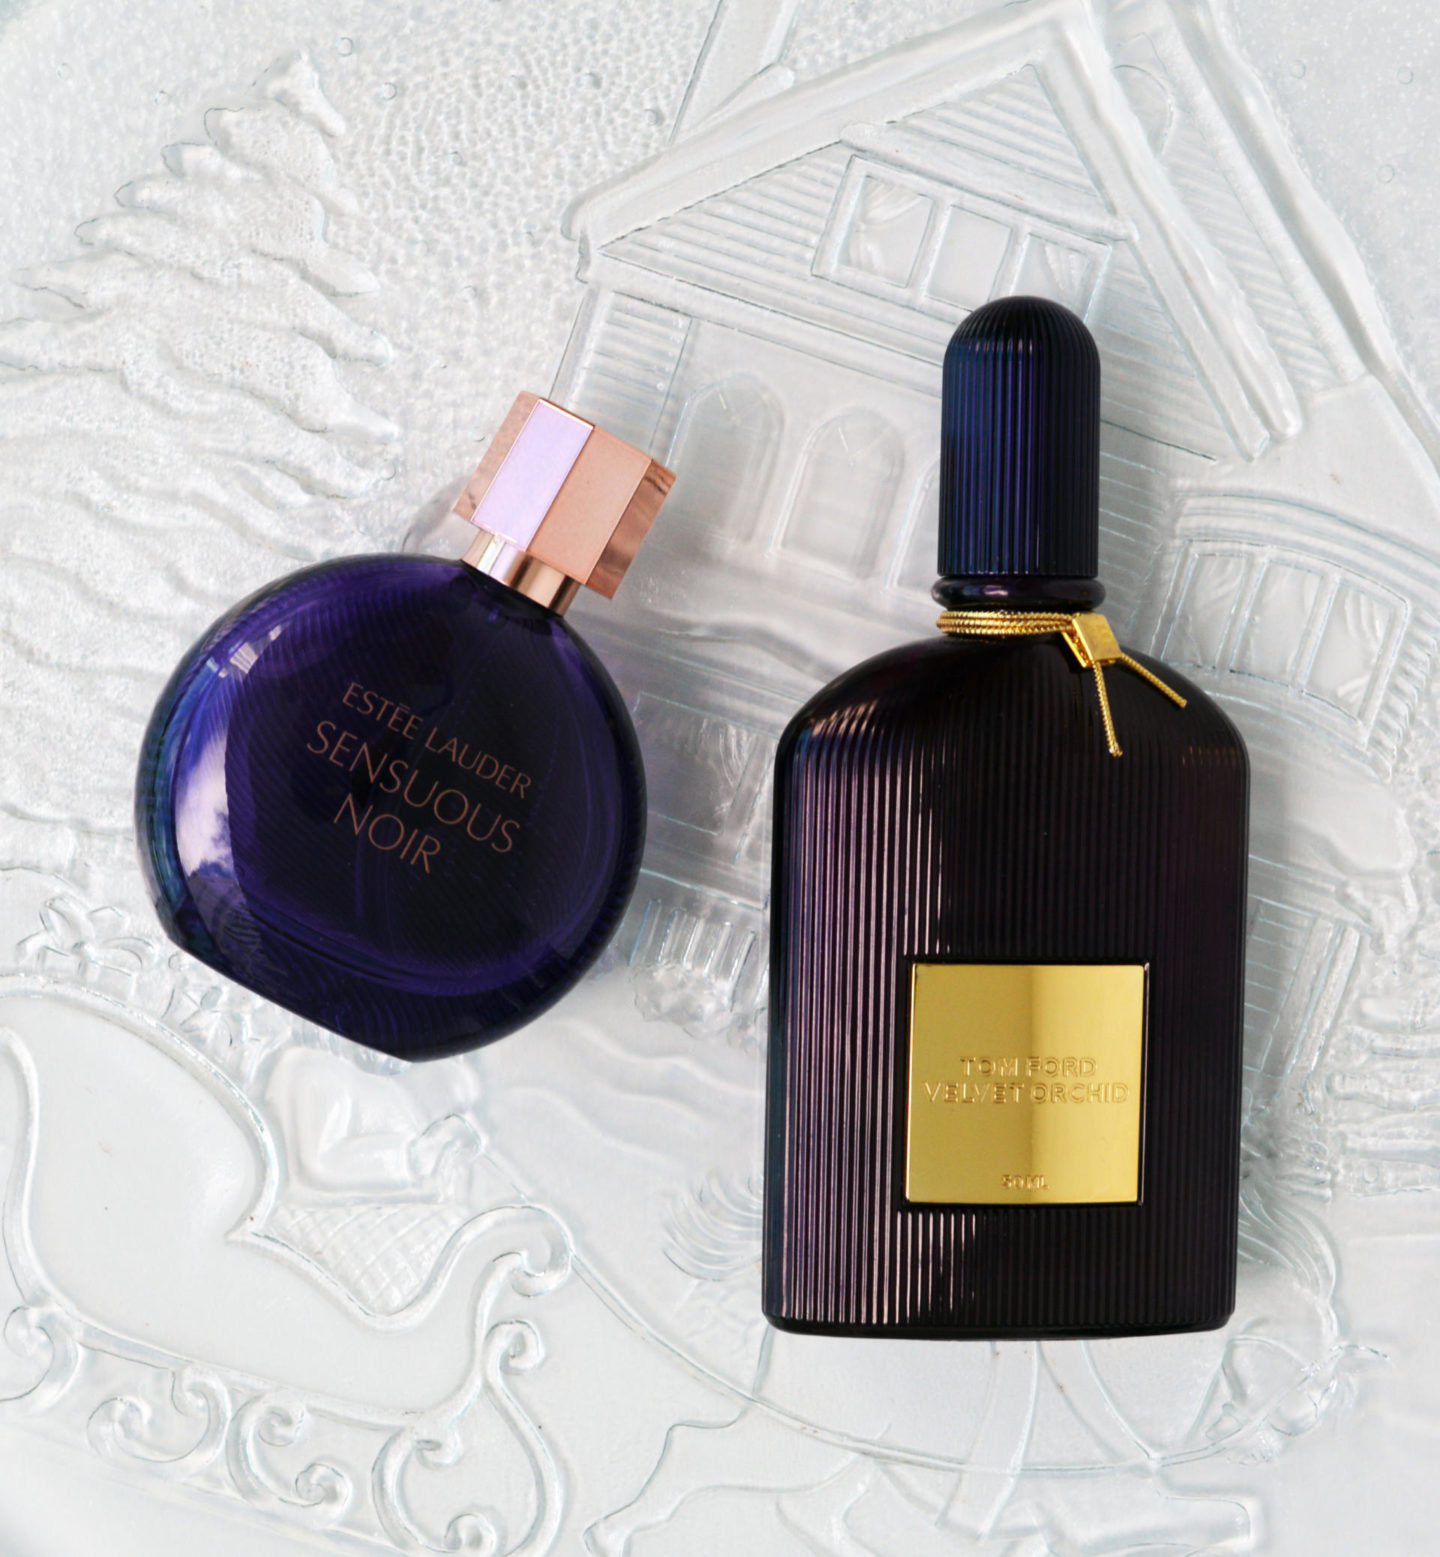 Tom Ford Velvet Orchid and Estee Lauder Sensuous Noir Perfume 